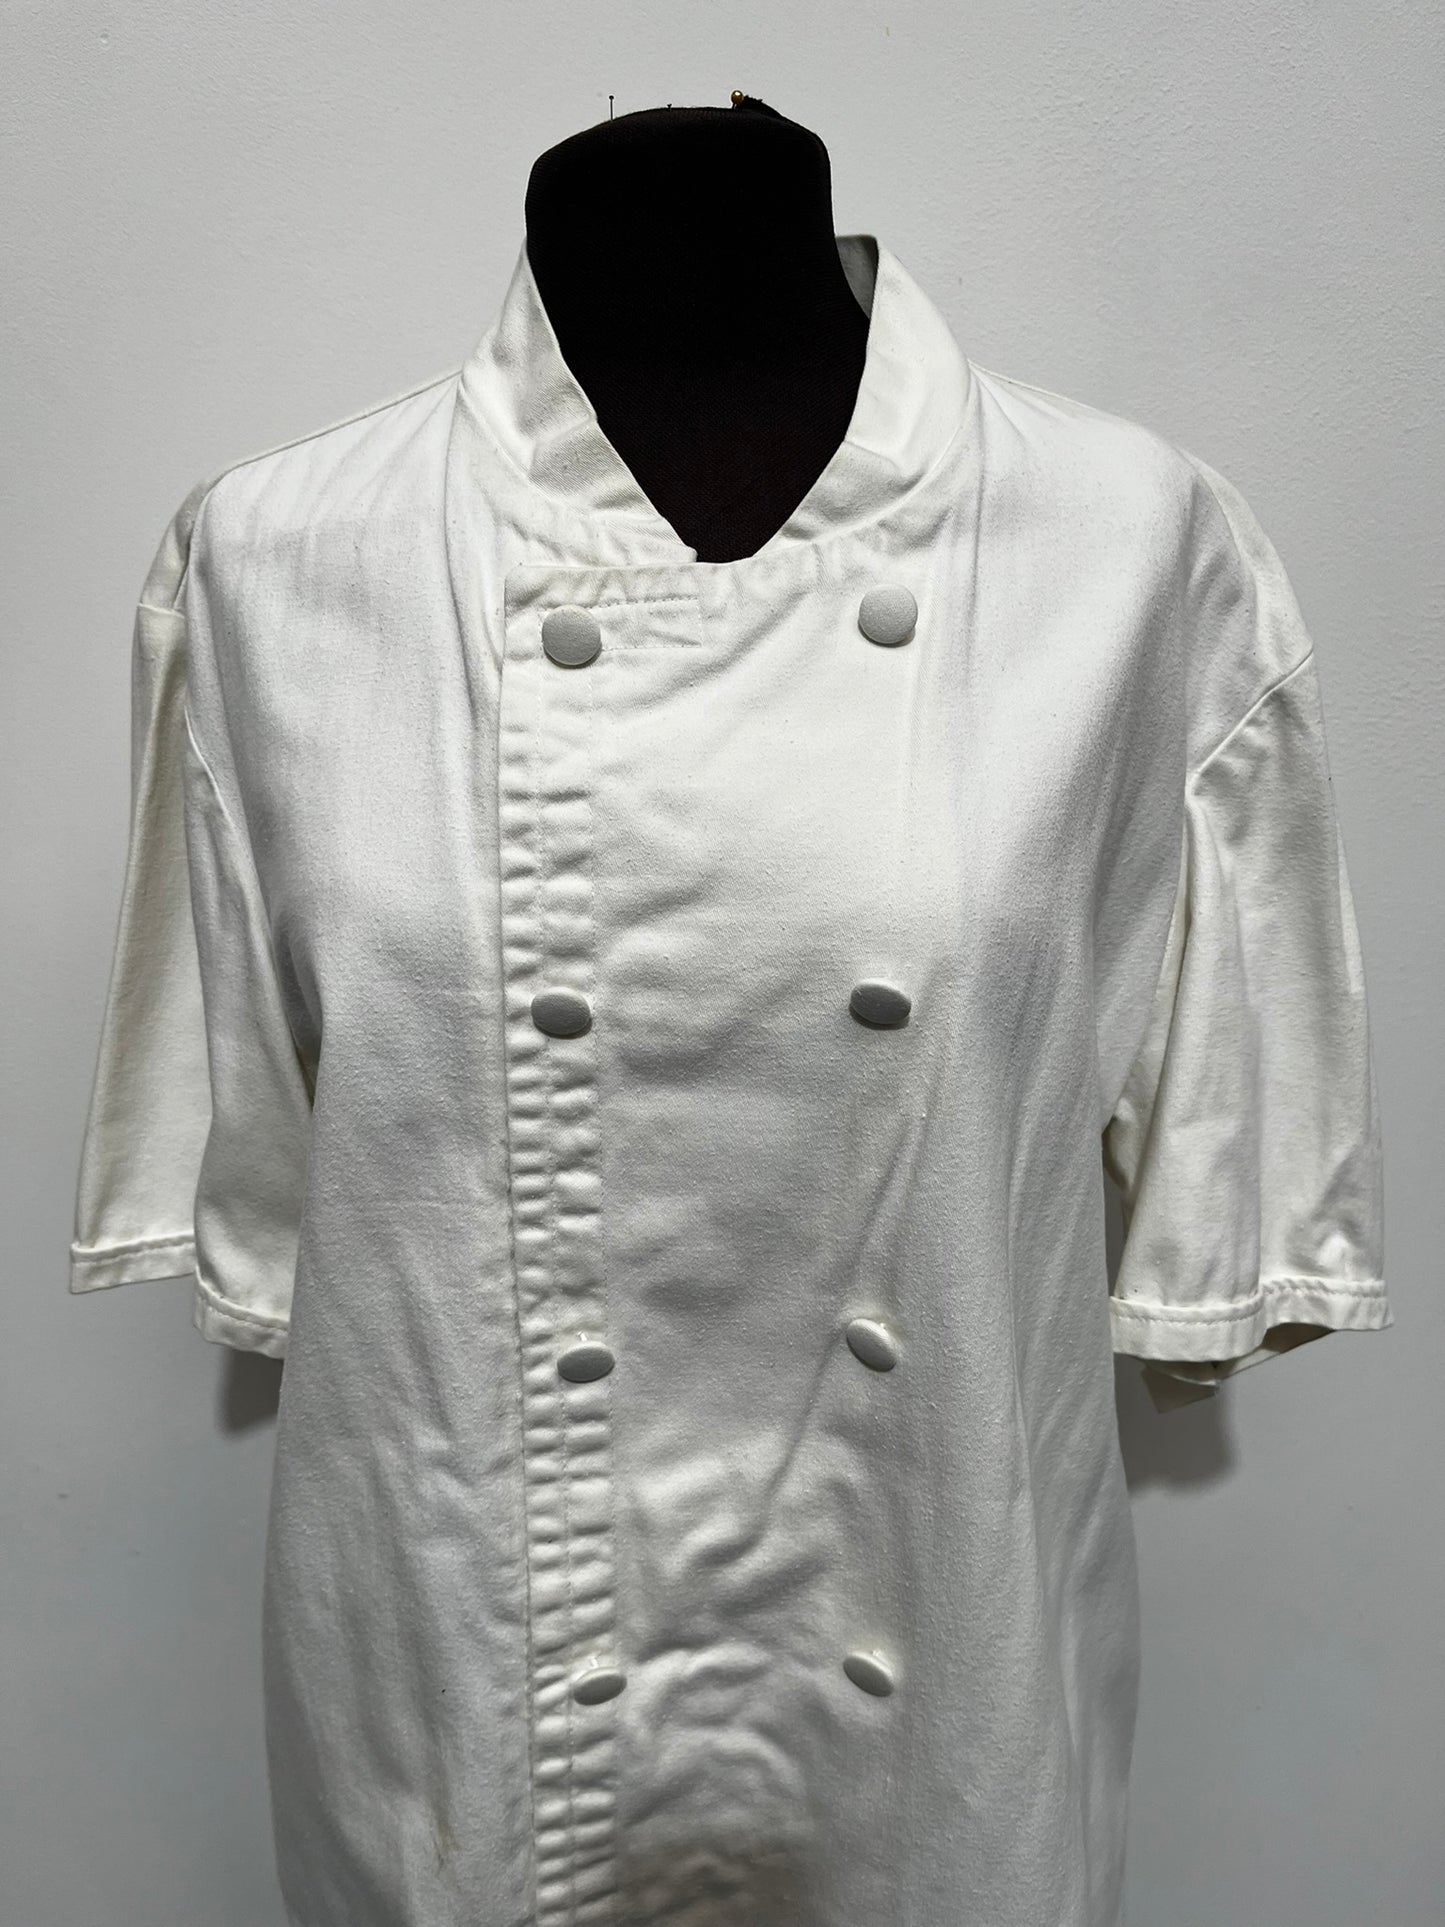 Authentic Chef Whites Uniform in USED Condition Size Medium